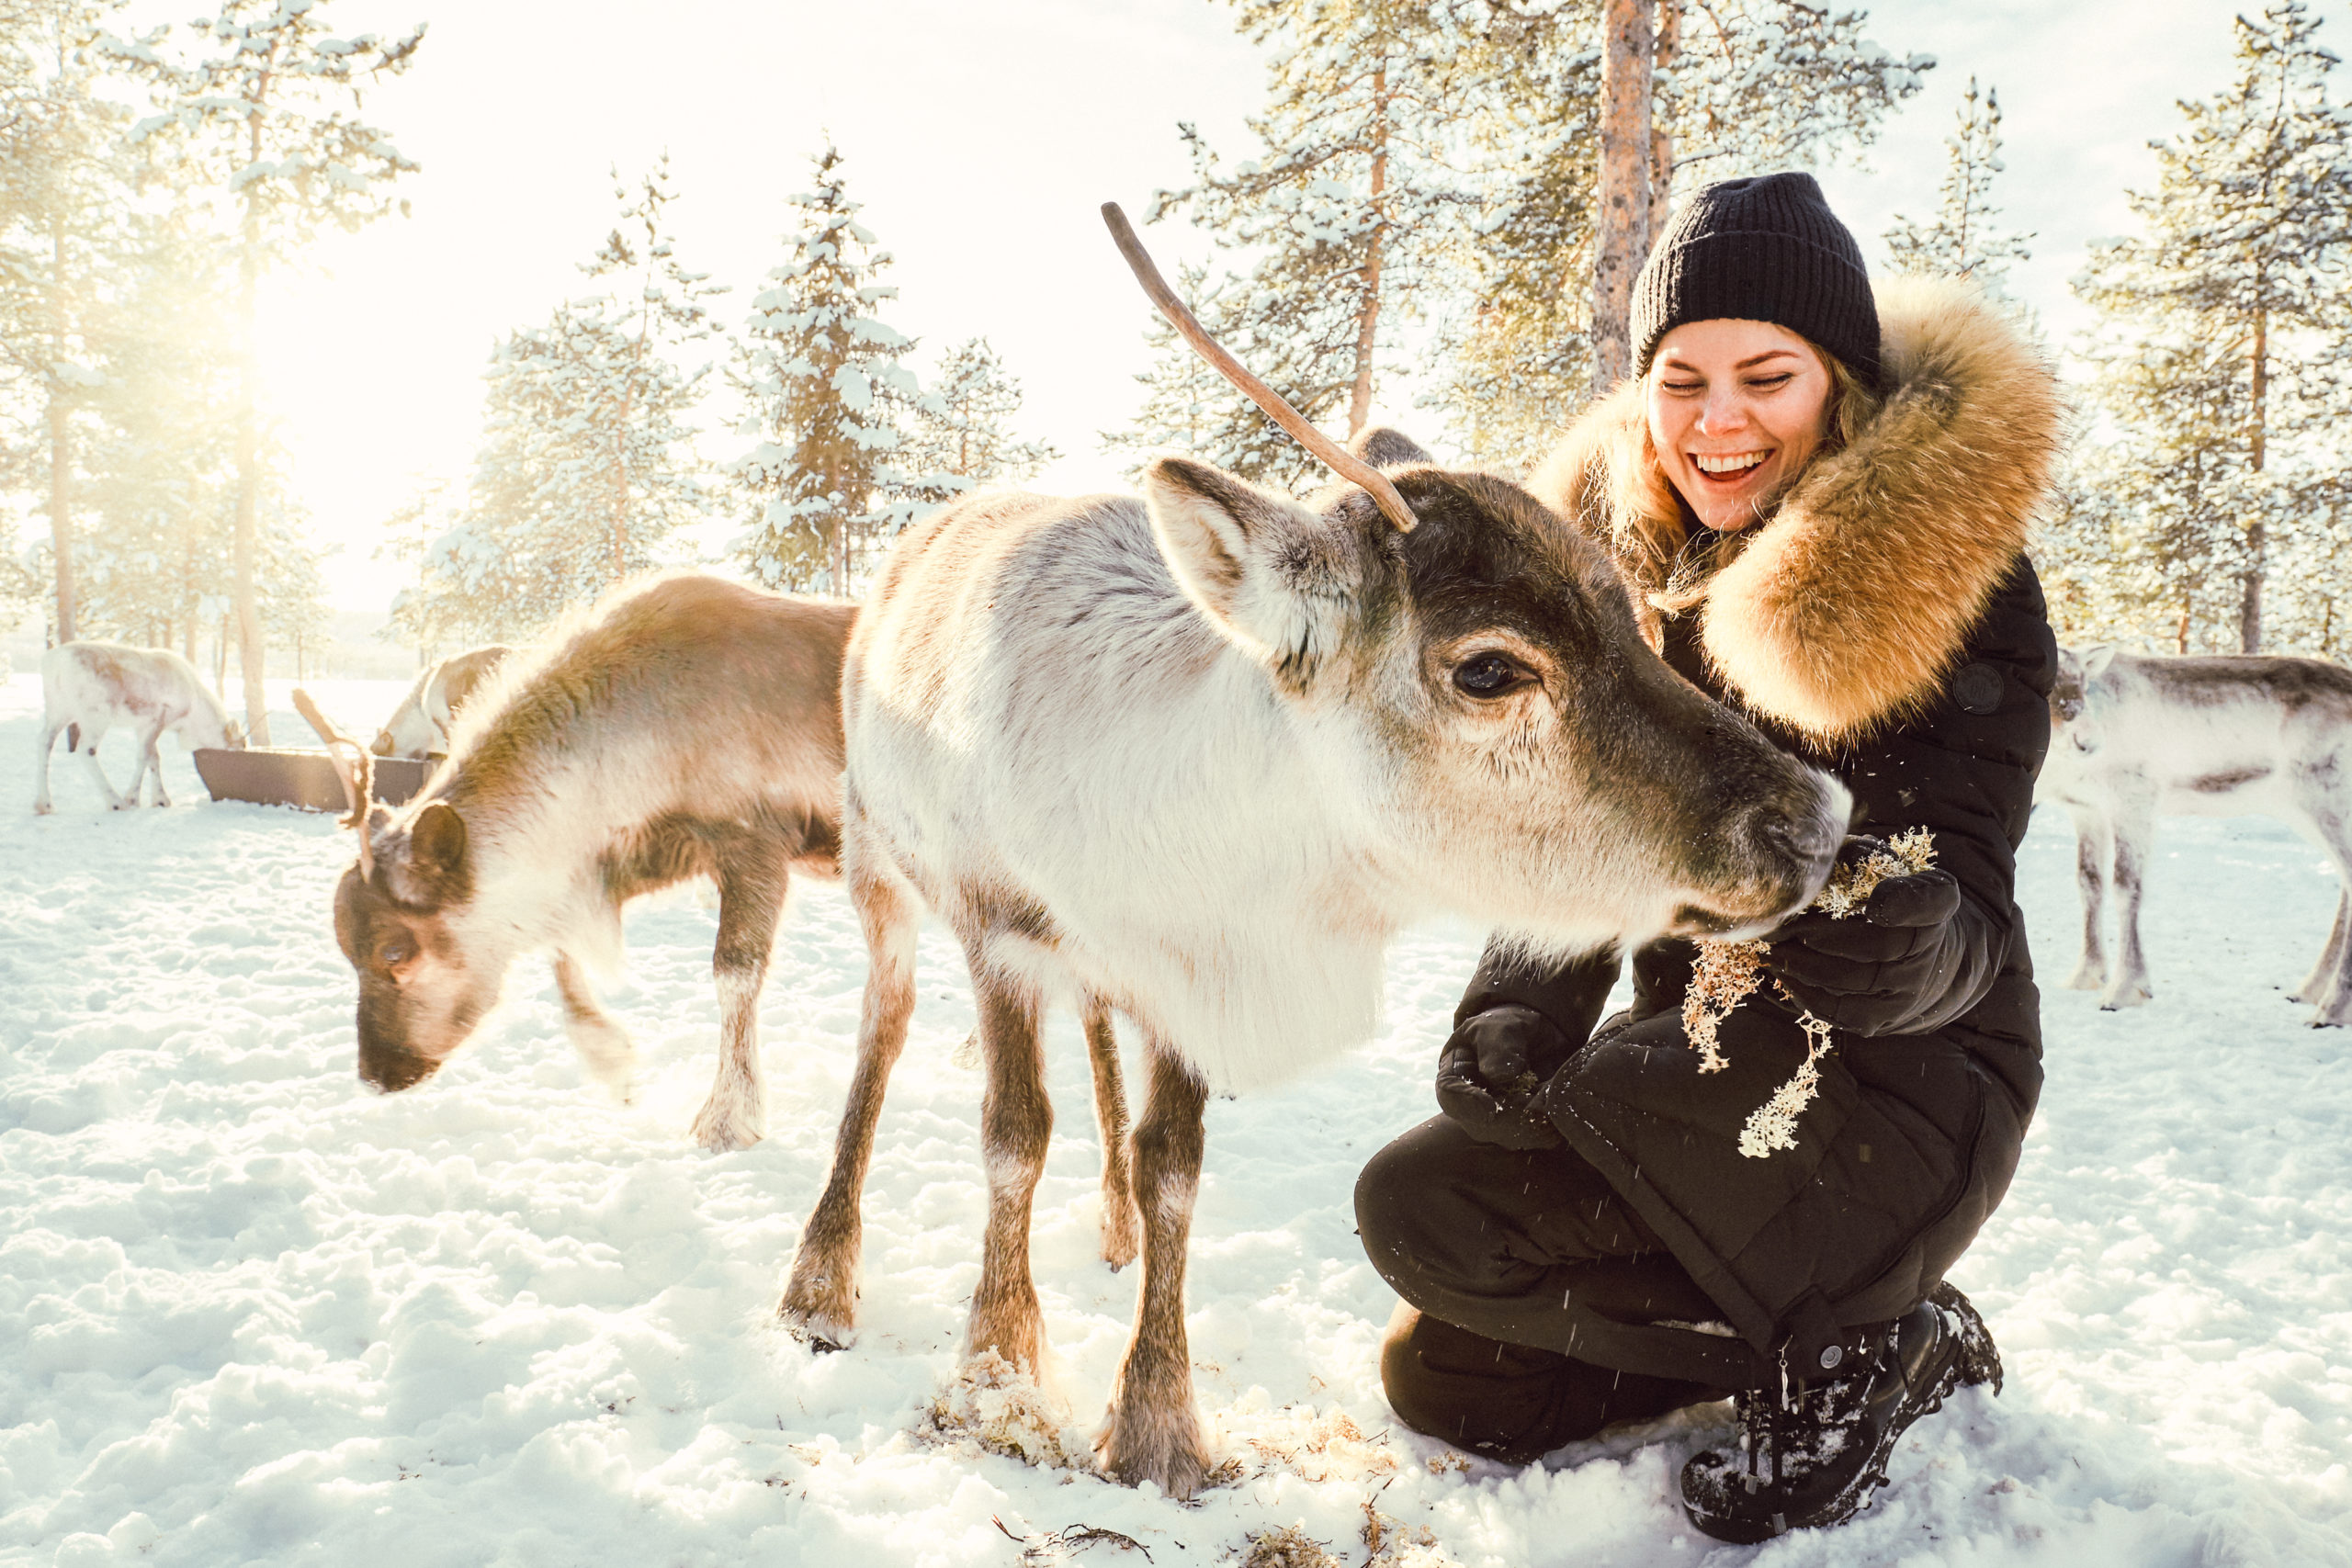 Tourist feeding reindeer